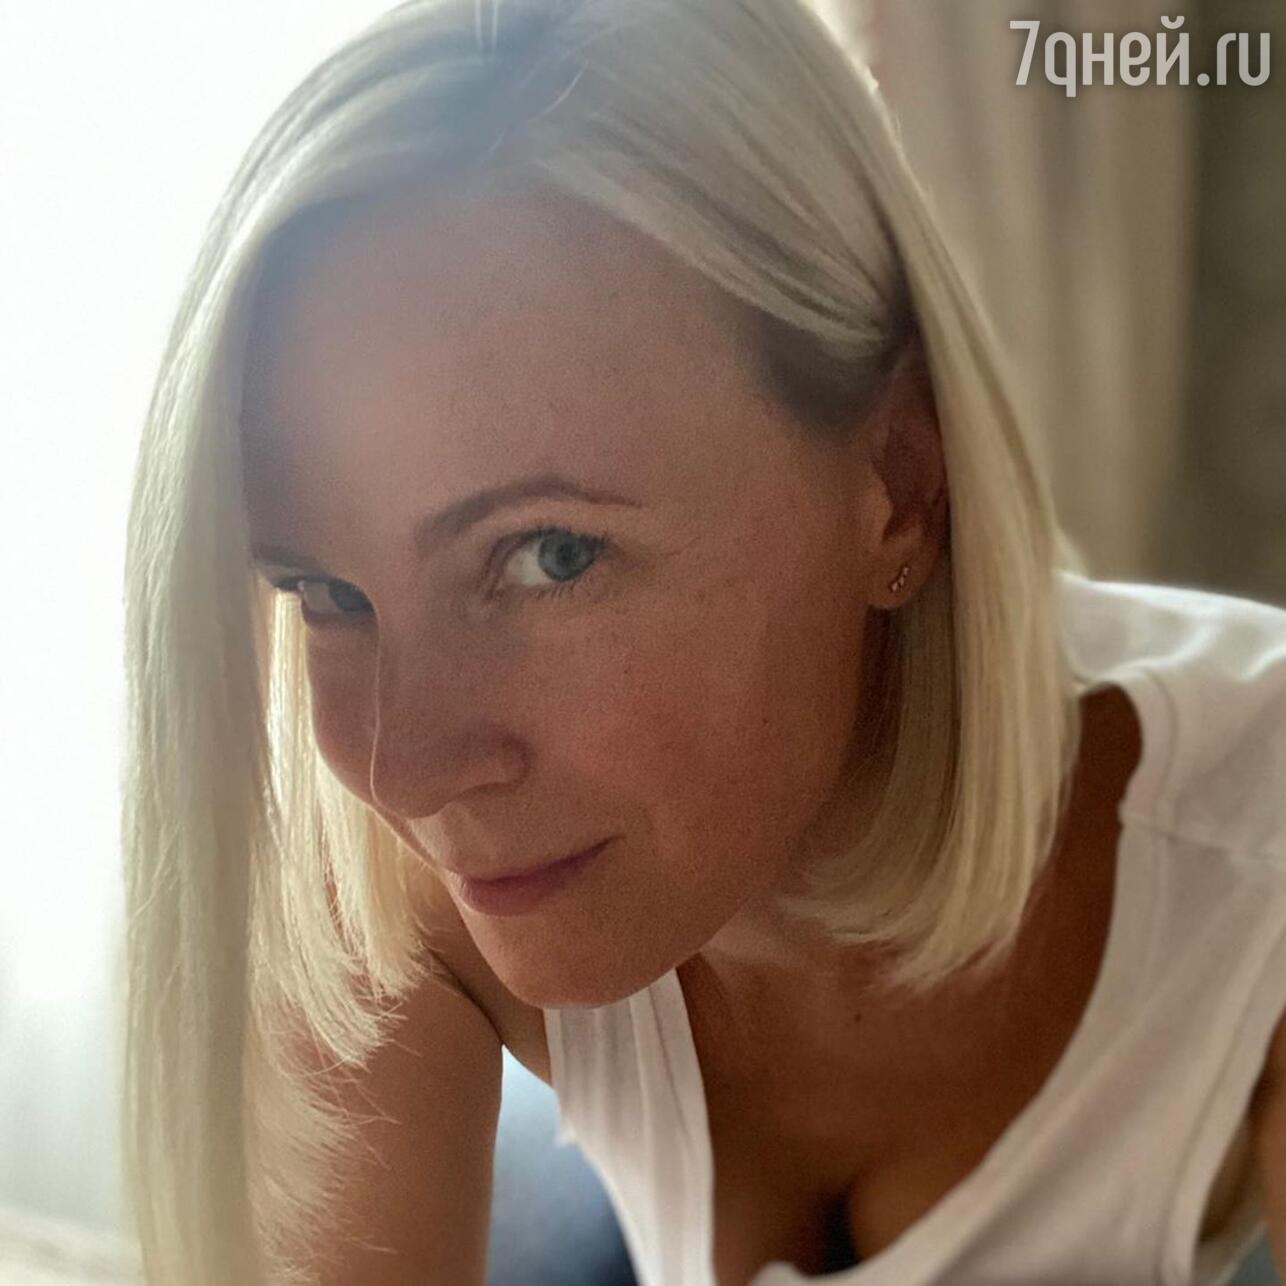 Мария куликова фейки (73 фото) - порно и эротика kingplayclub.ru